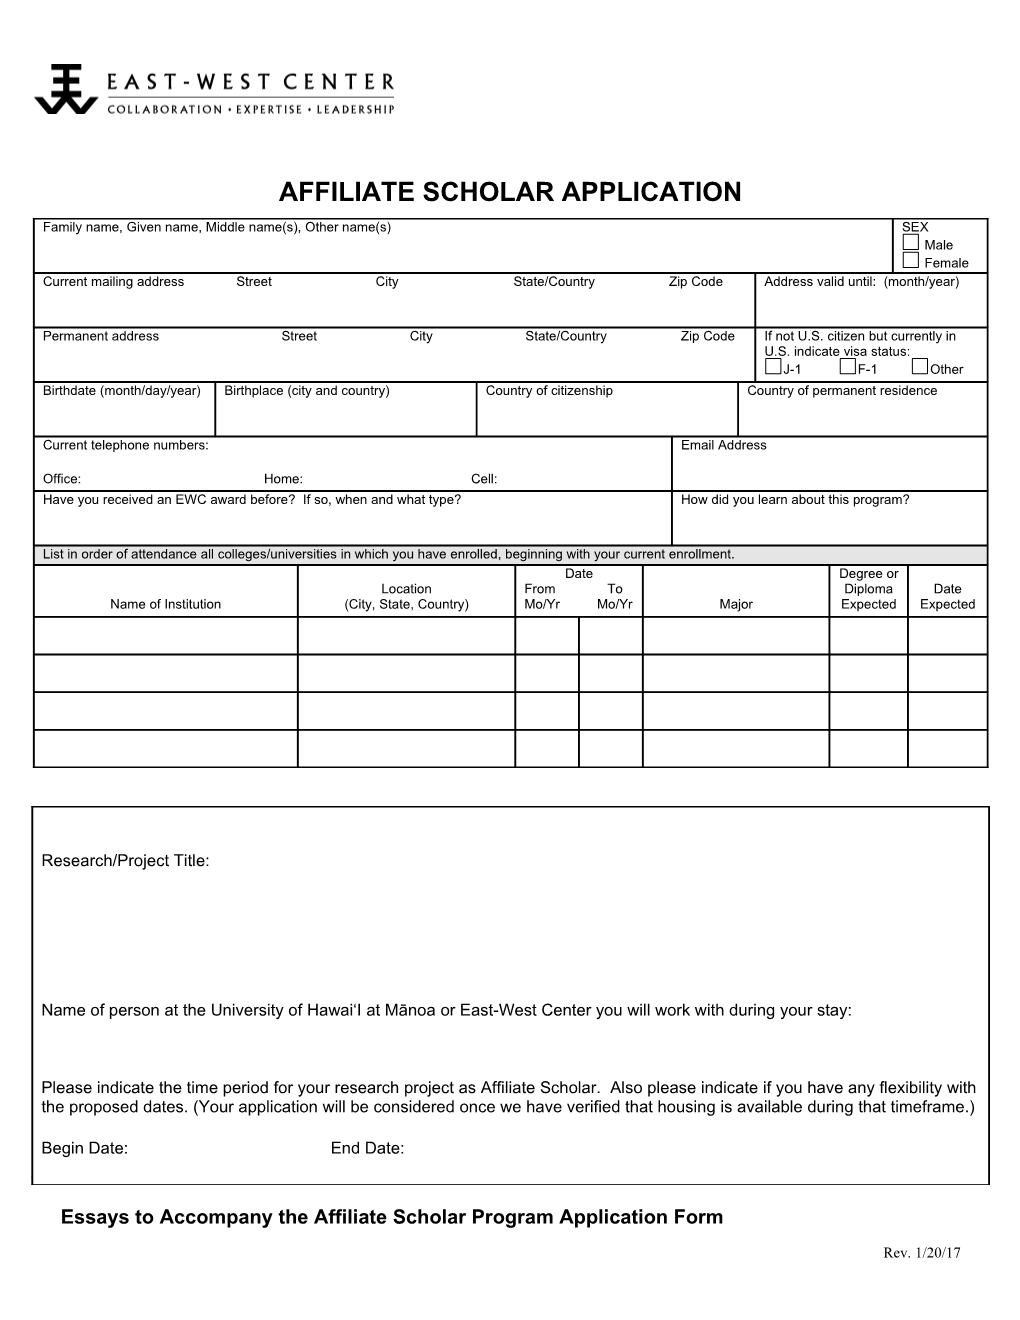 Essays to Accompany the Affiliate Scholar Program Application Form